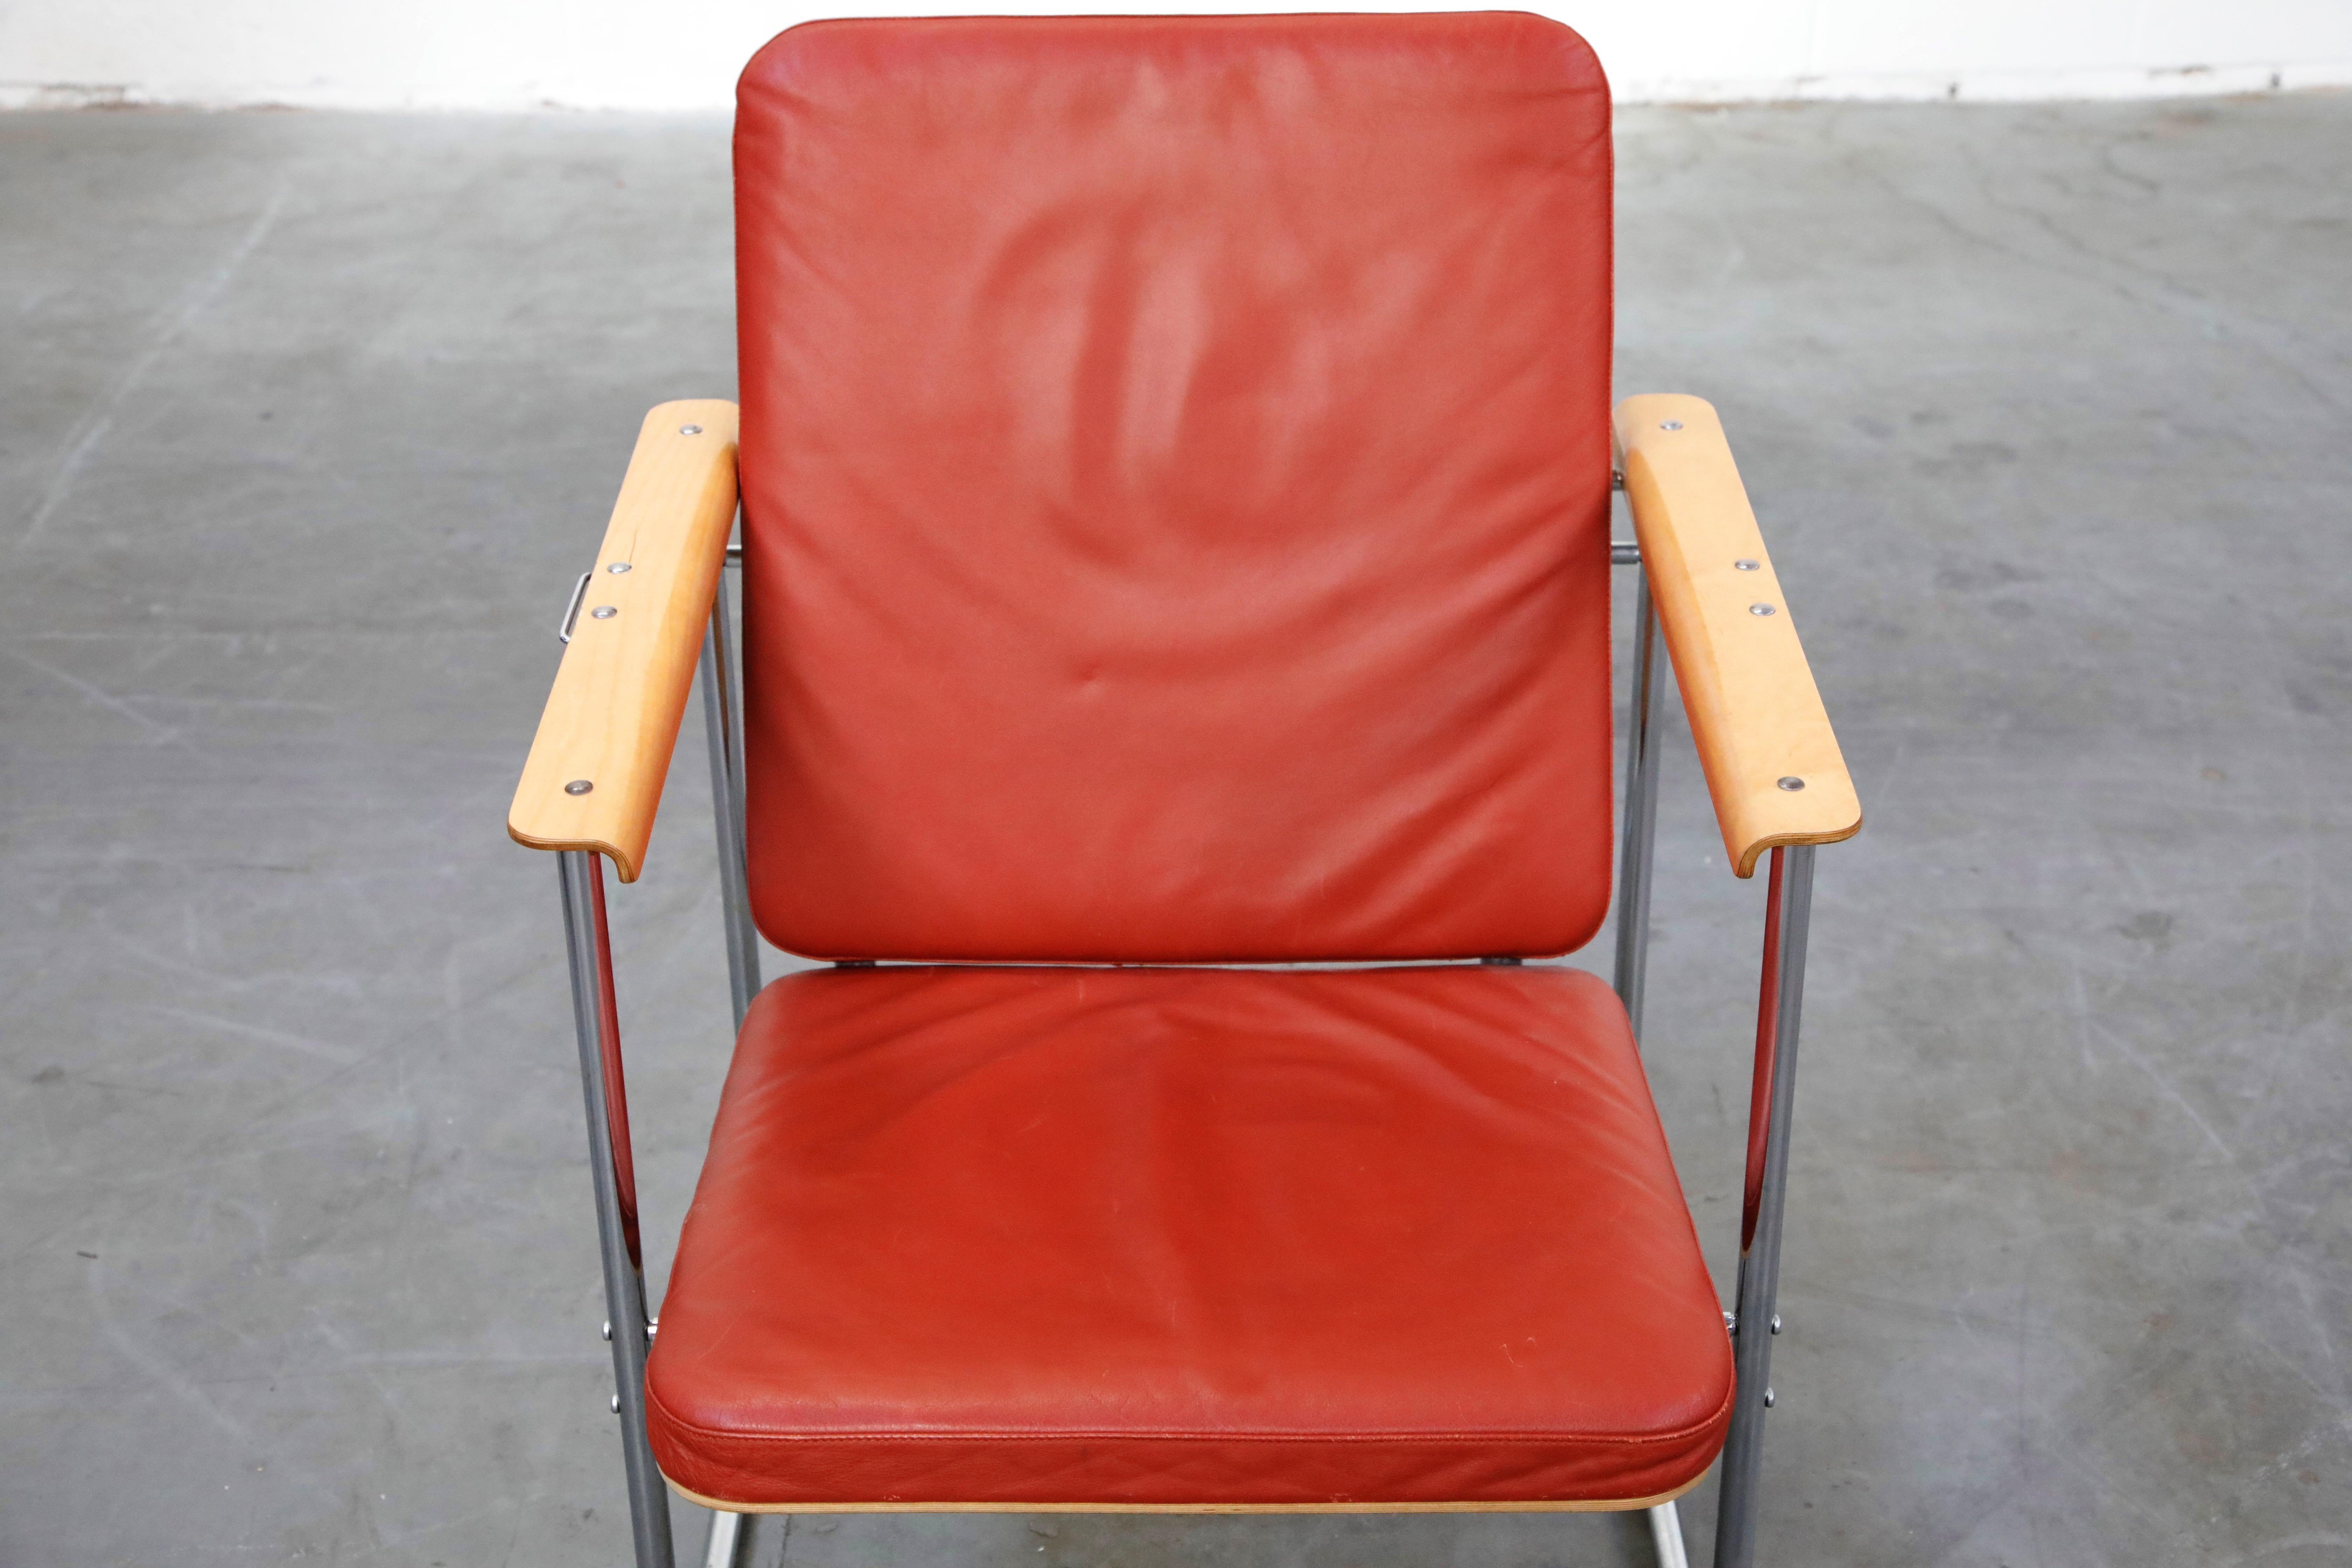 Yrjö Kukkapuro 'Skaala' Leather Lounge Chairs for Avarte, Finland, 1970s For Sale 1